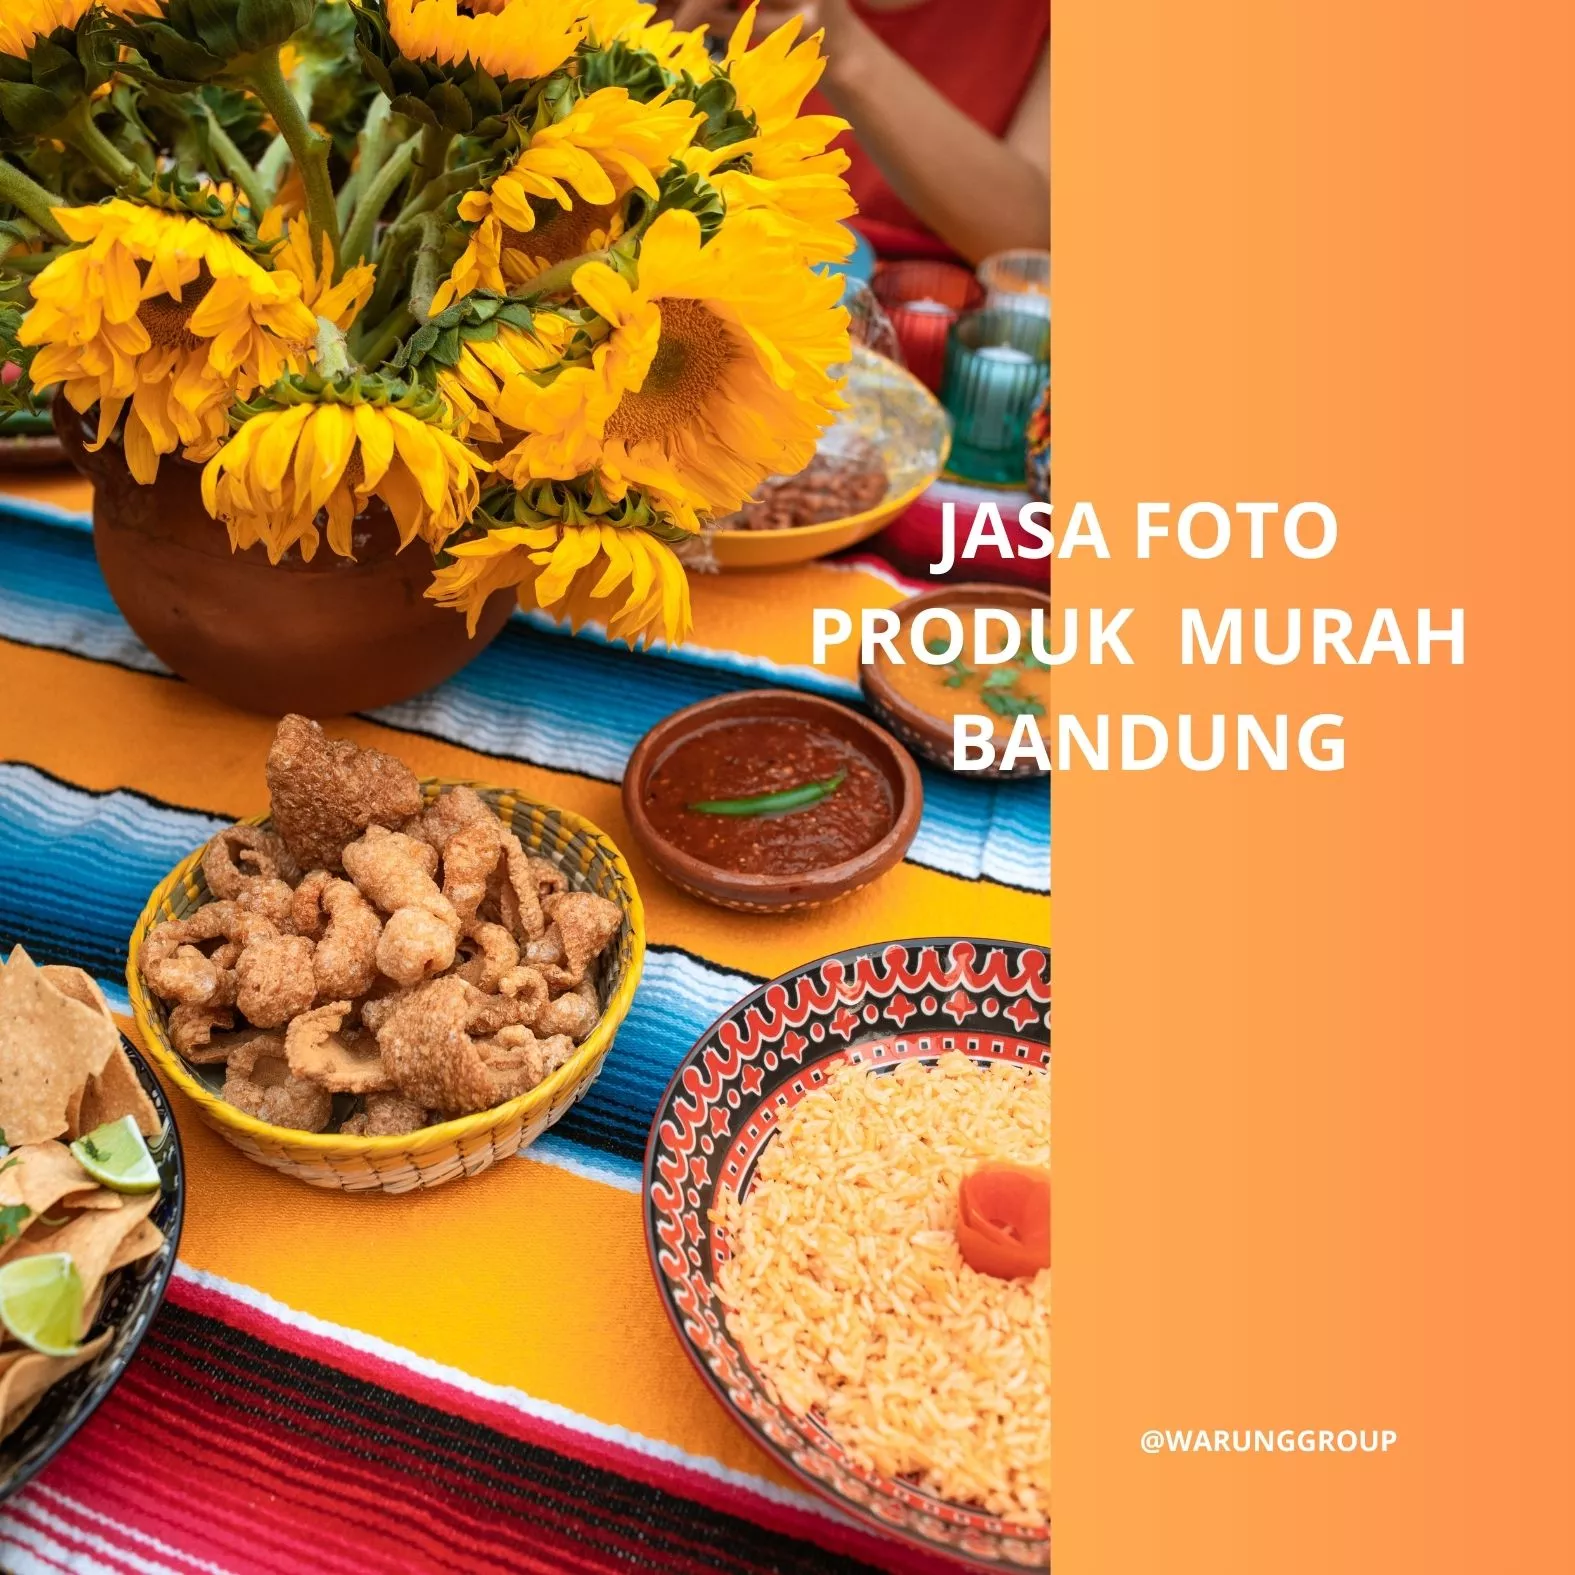 Jasa Foto Produk Murah Bandung